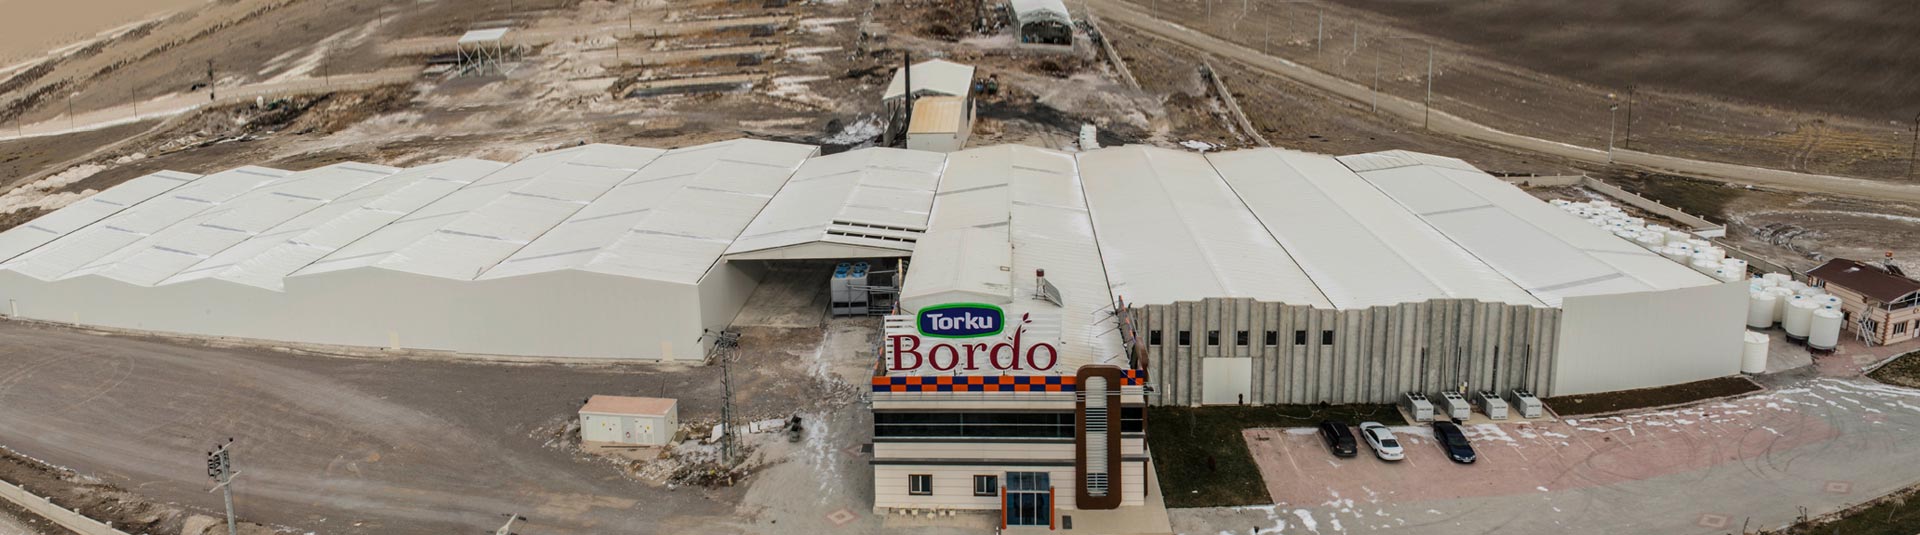 Bordo - Şalgam Suyu Fabrikası